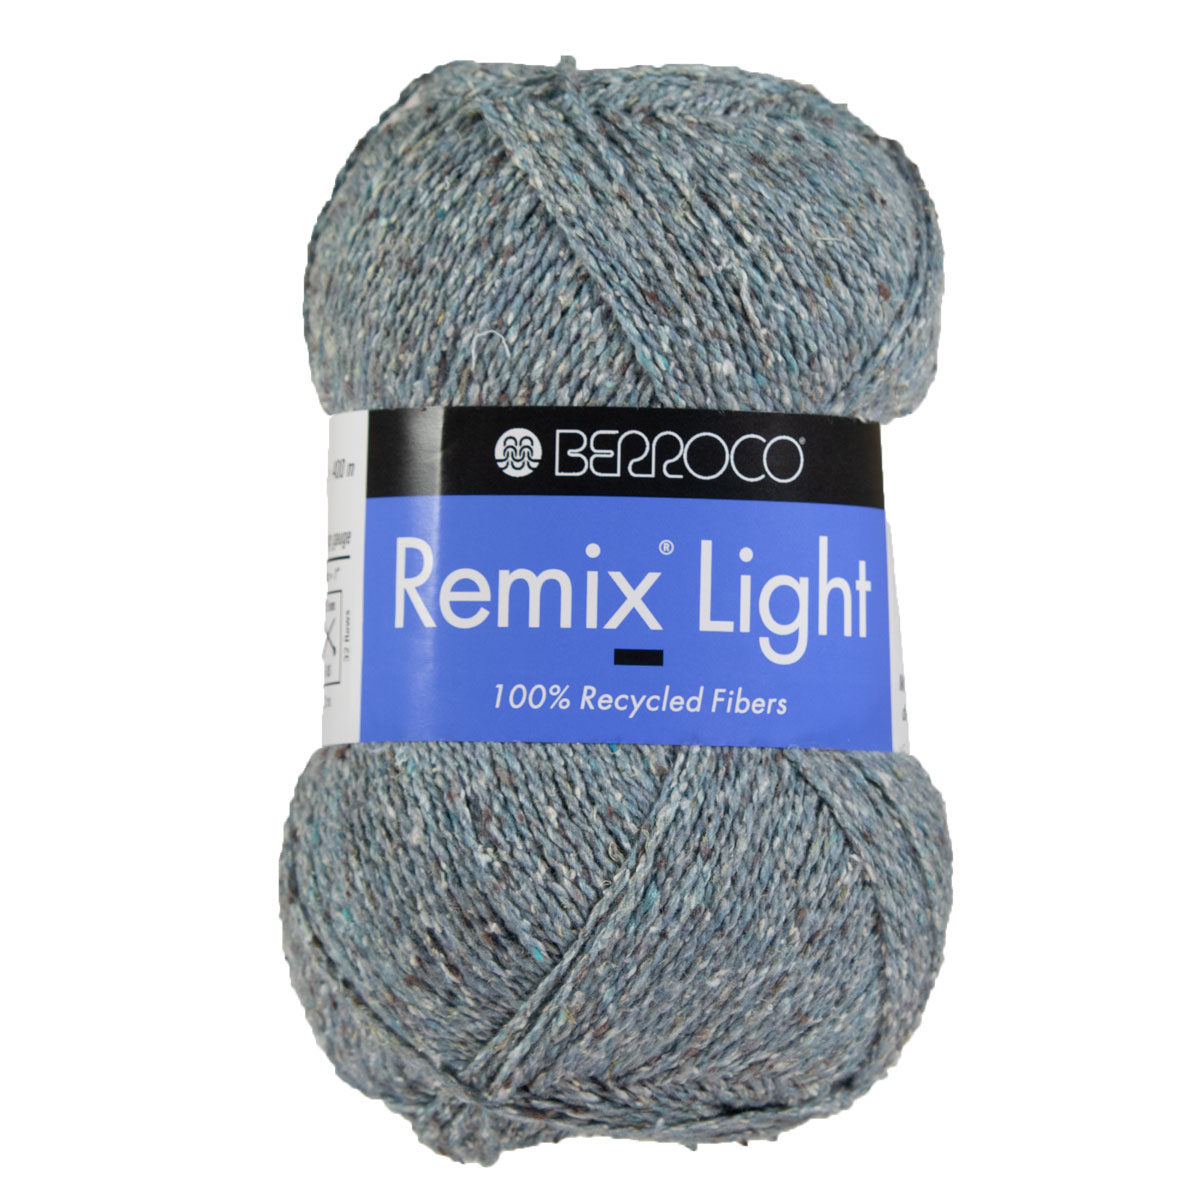 Berroco Remix Light Yarn - 6919 Mist at Jimmy Beans Wool